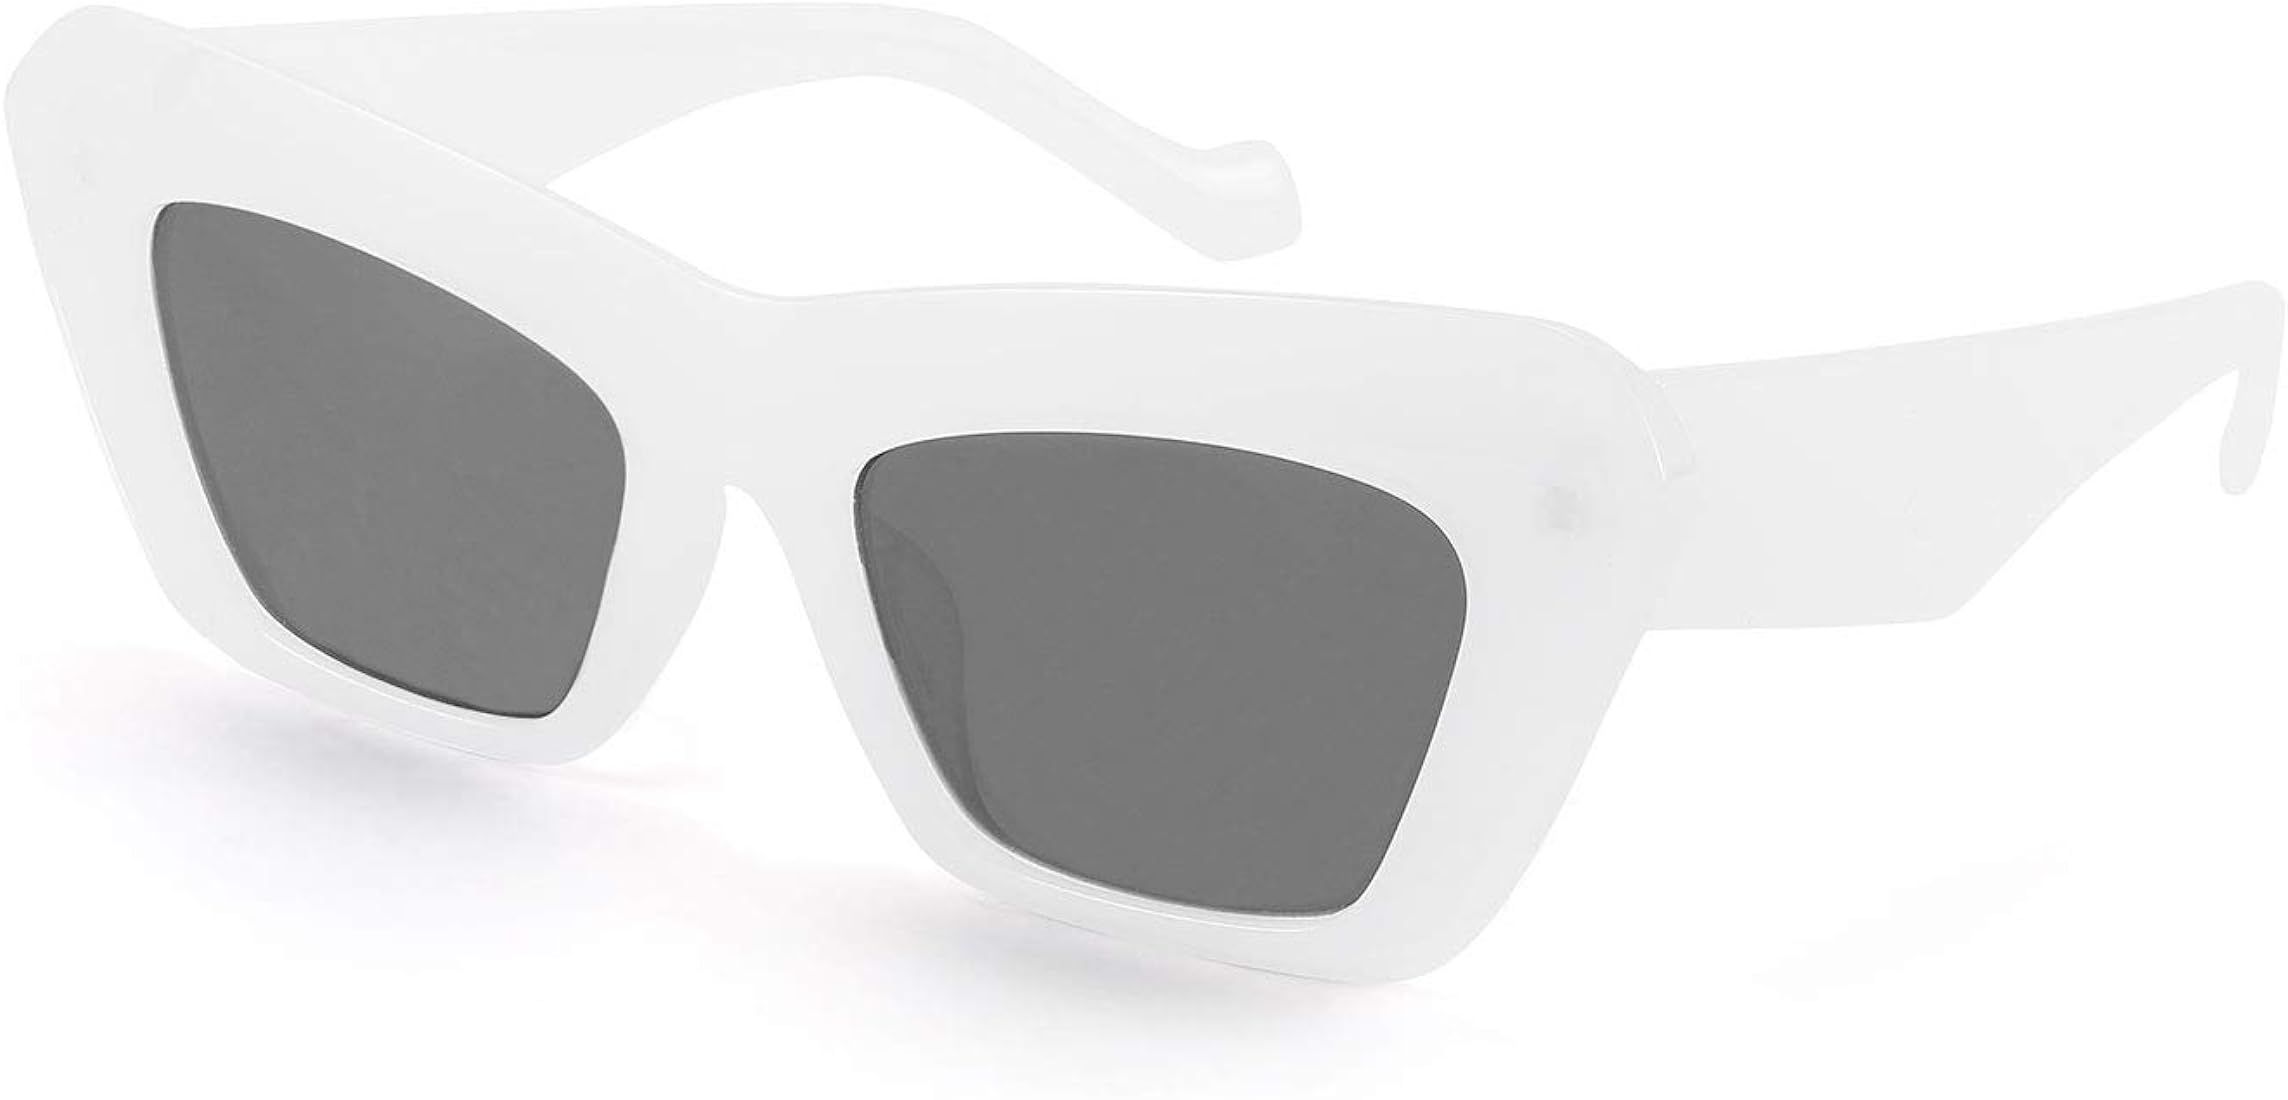 Karsaer Vision Retro Vintage Cateye Square Sunglasses Plastic Frame | Amazon (US)